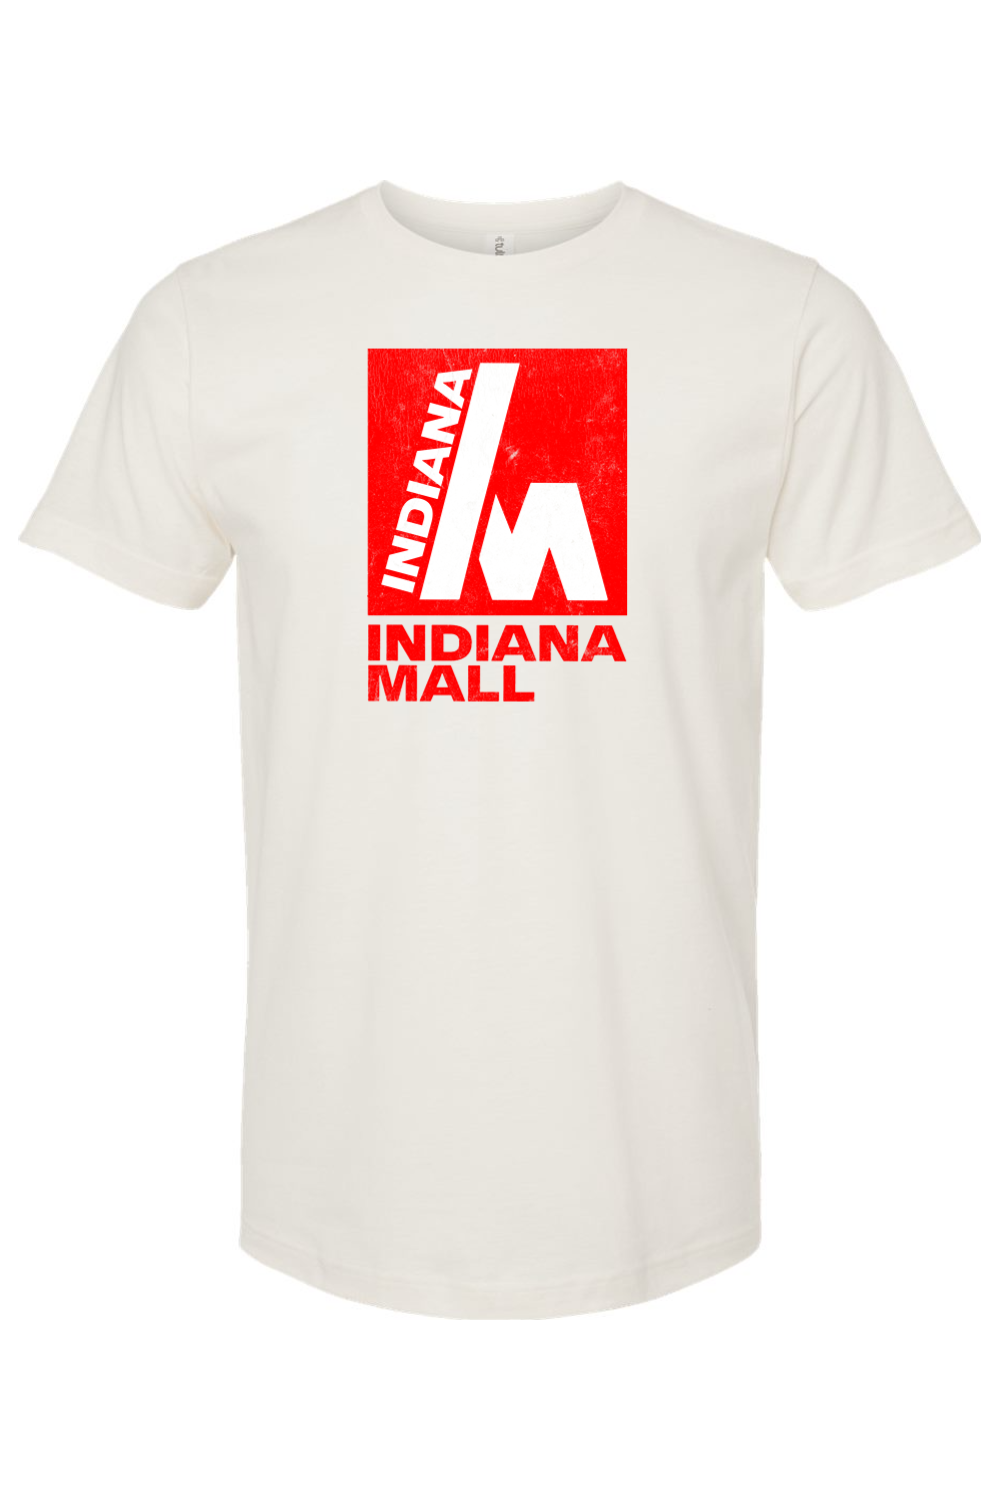 Indiana Mall - Indiana, PA - Yinzylvania